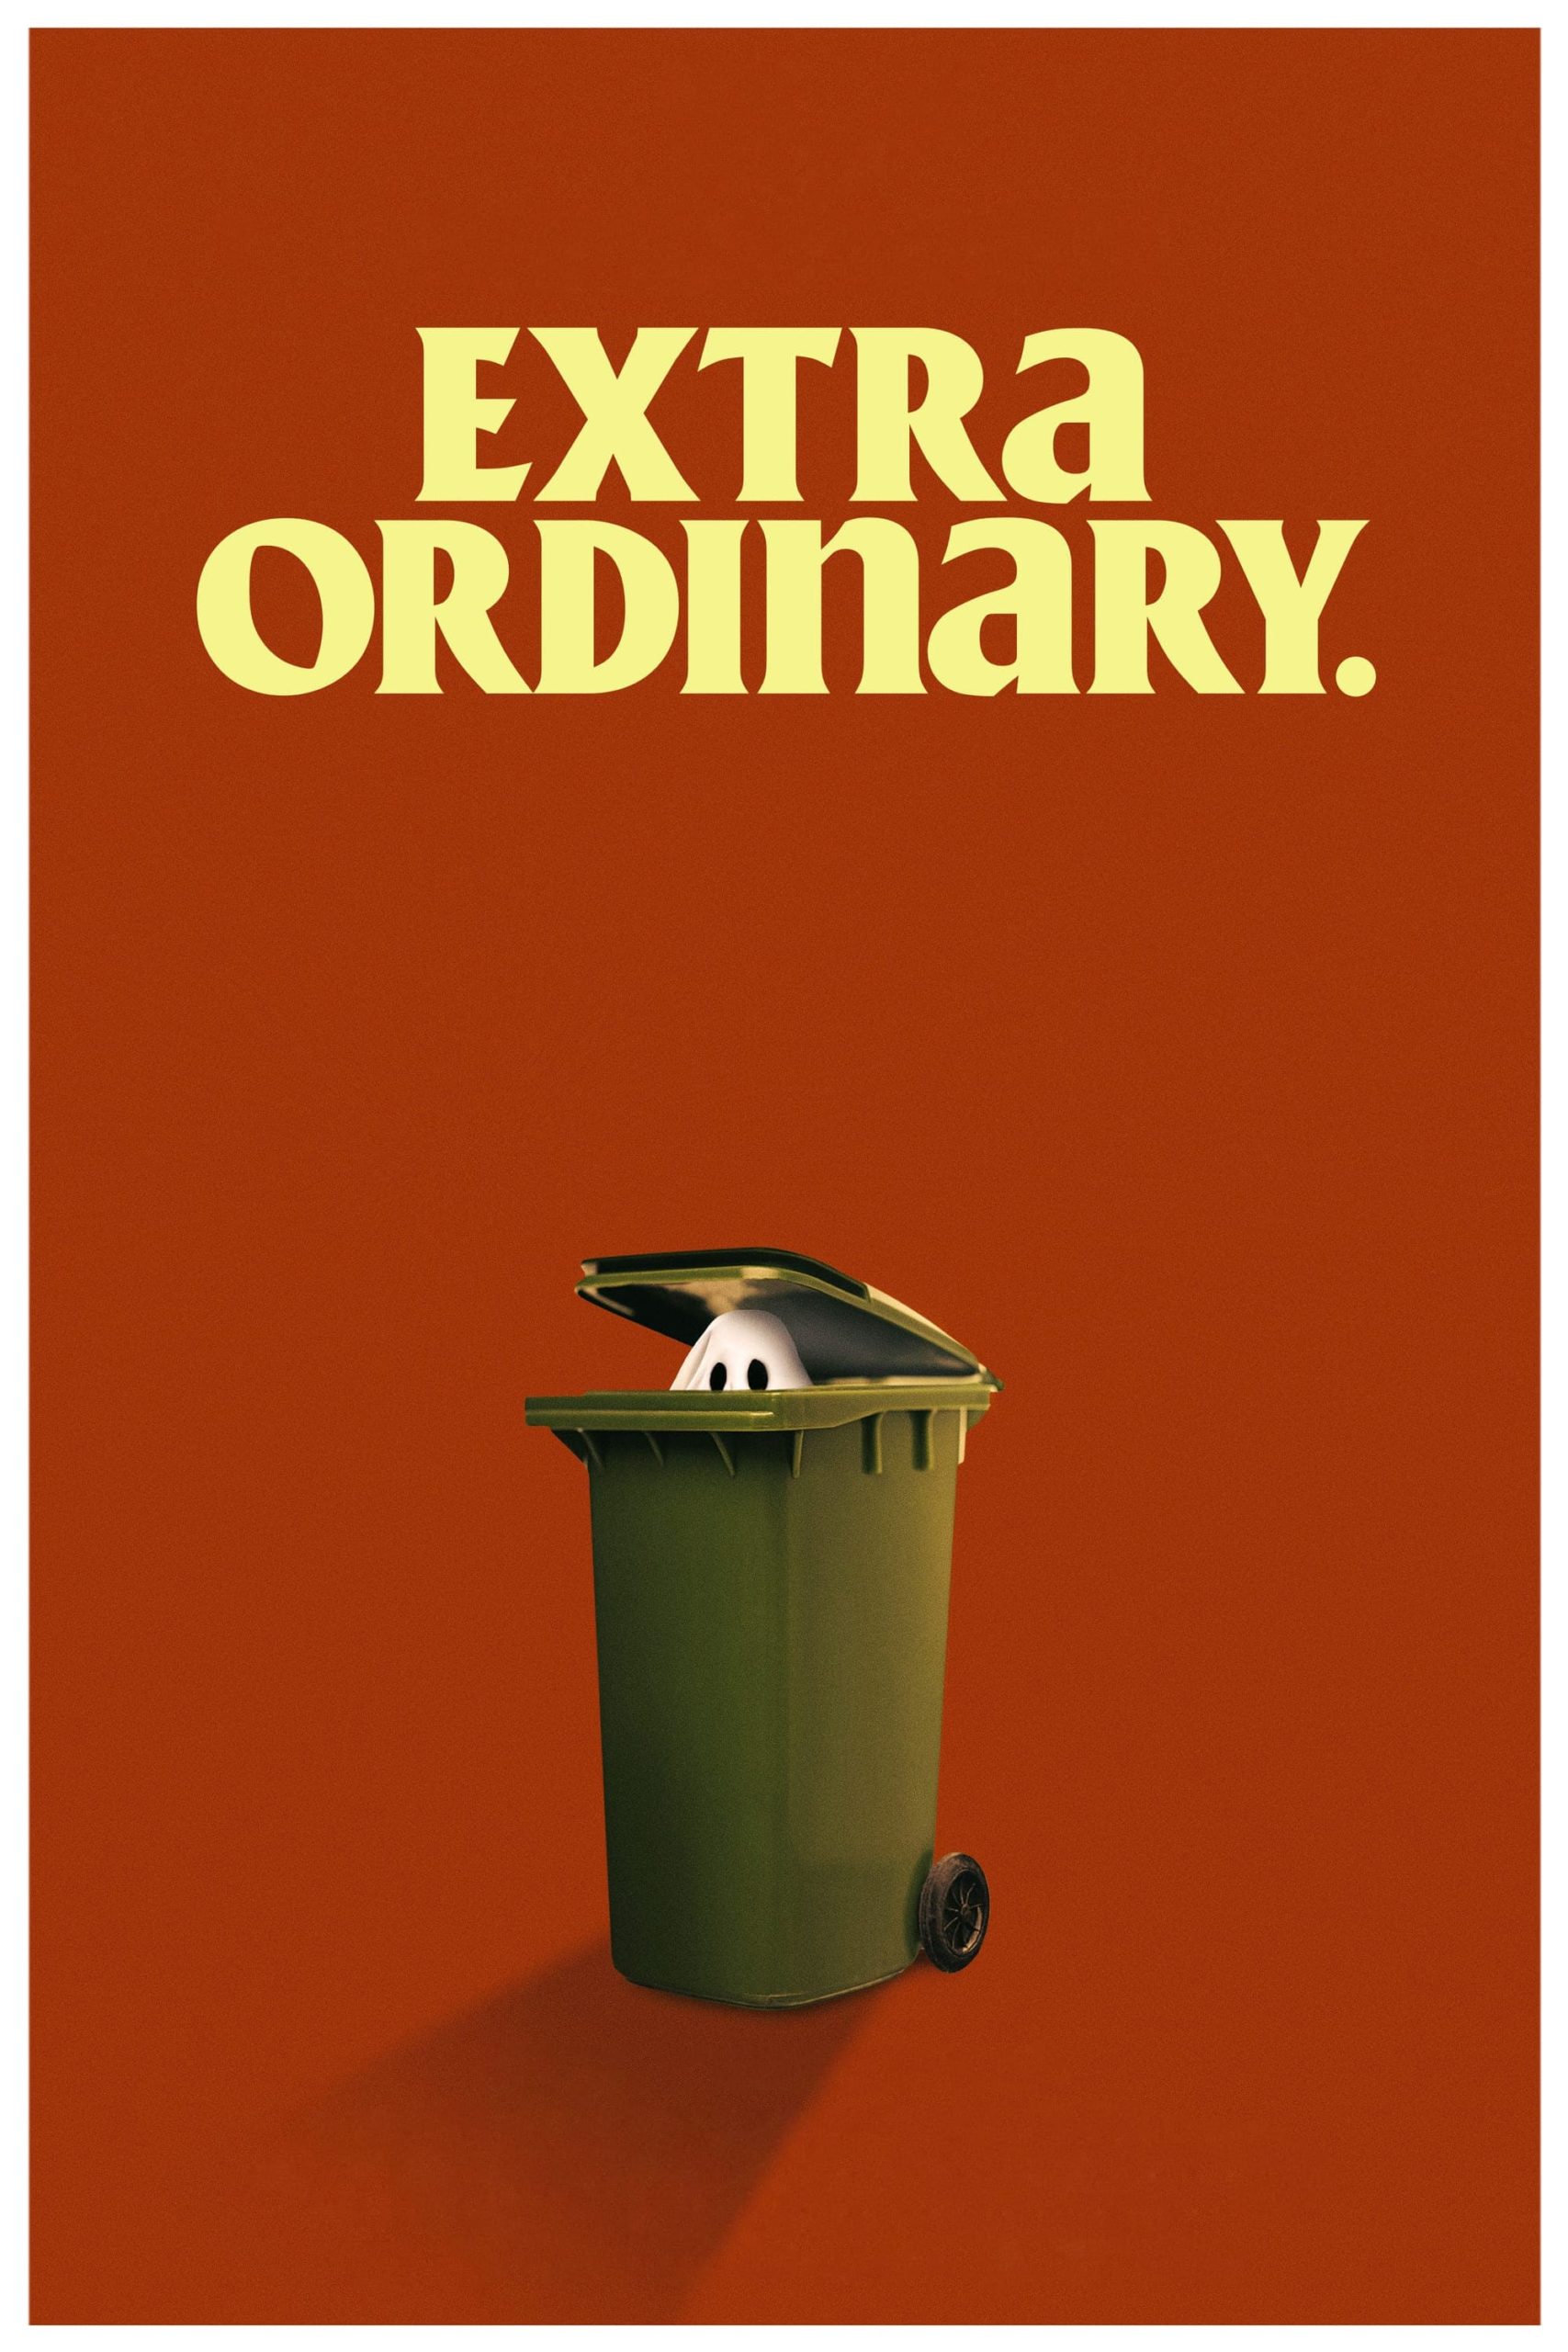 Poster de la película "Extra Ordinary."